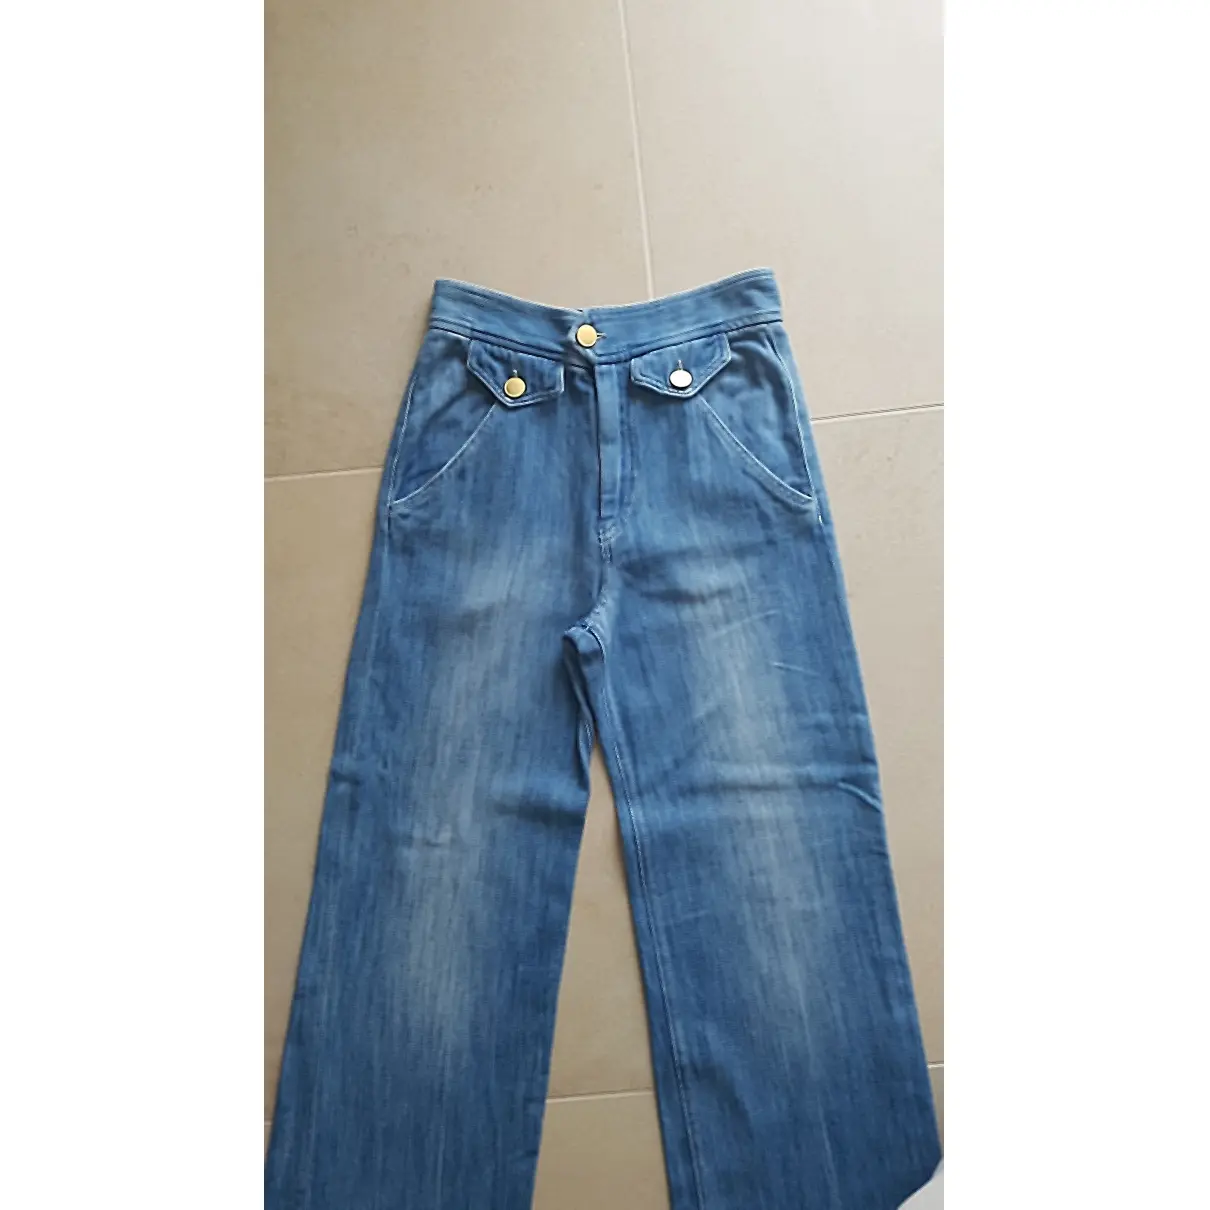 Buy Isabel Marant Blue Cotton Jeans online